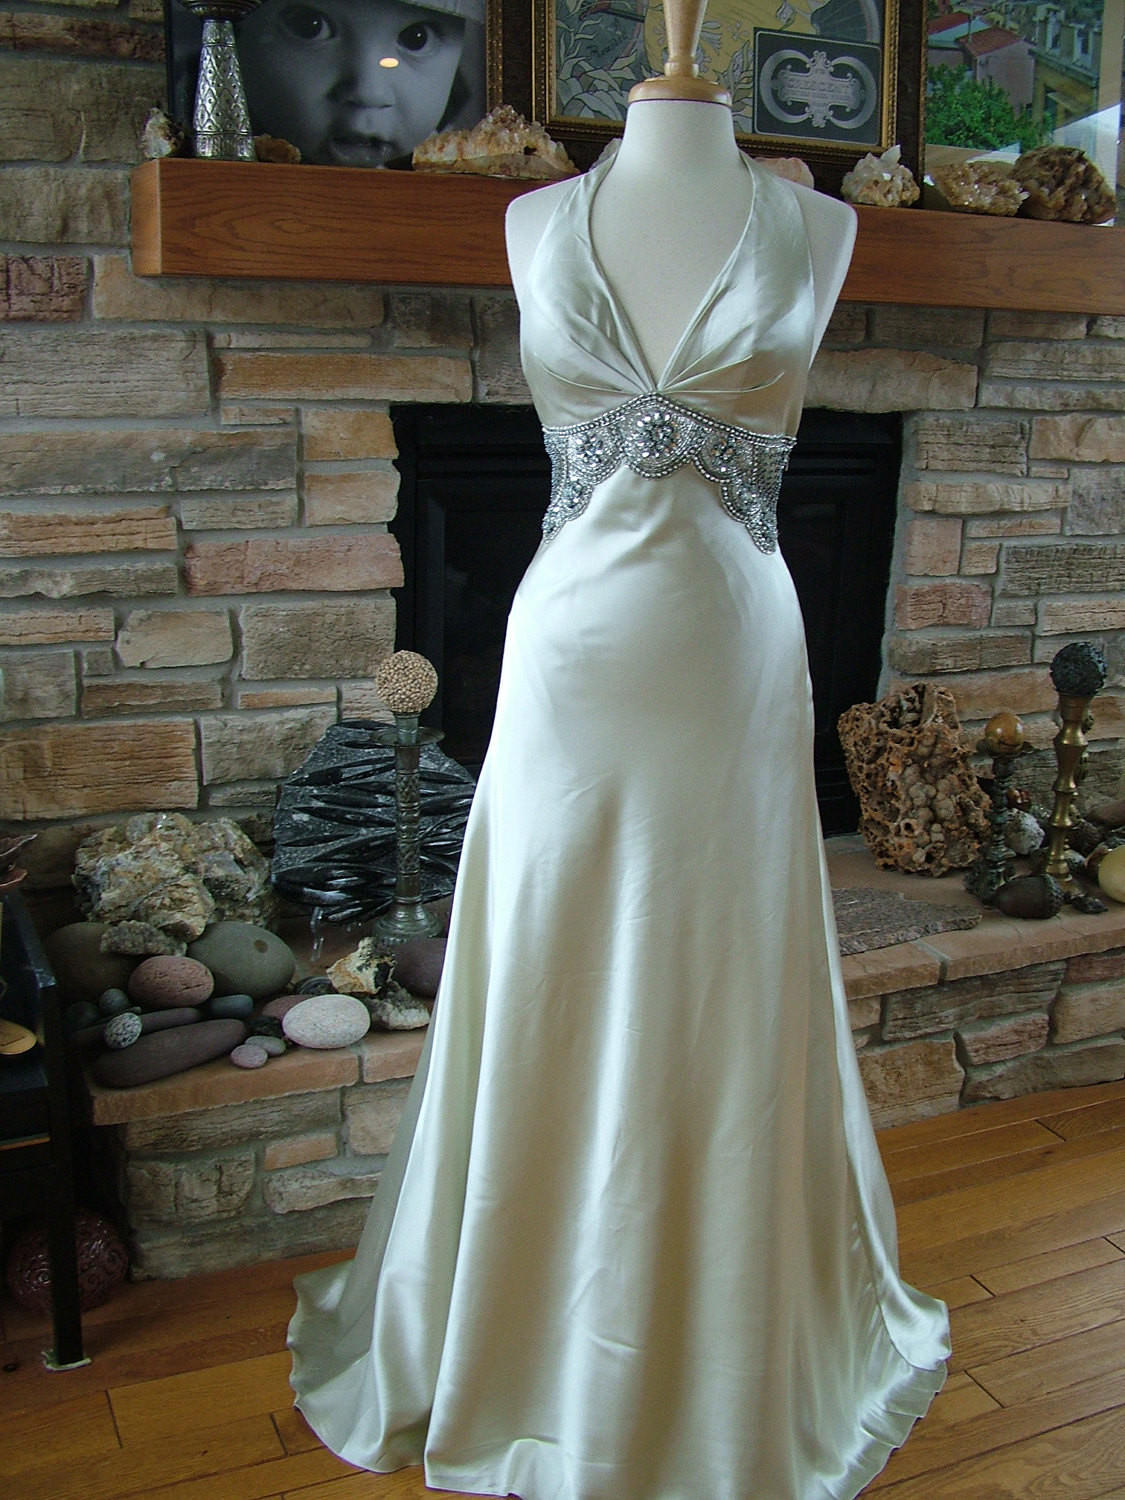 Retro Wedding Gowns
 Wedding dress 1930s vintage inspired bridal gown reception